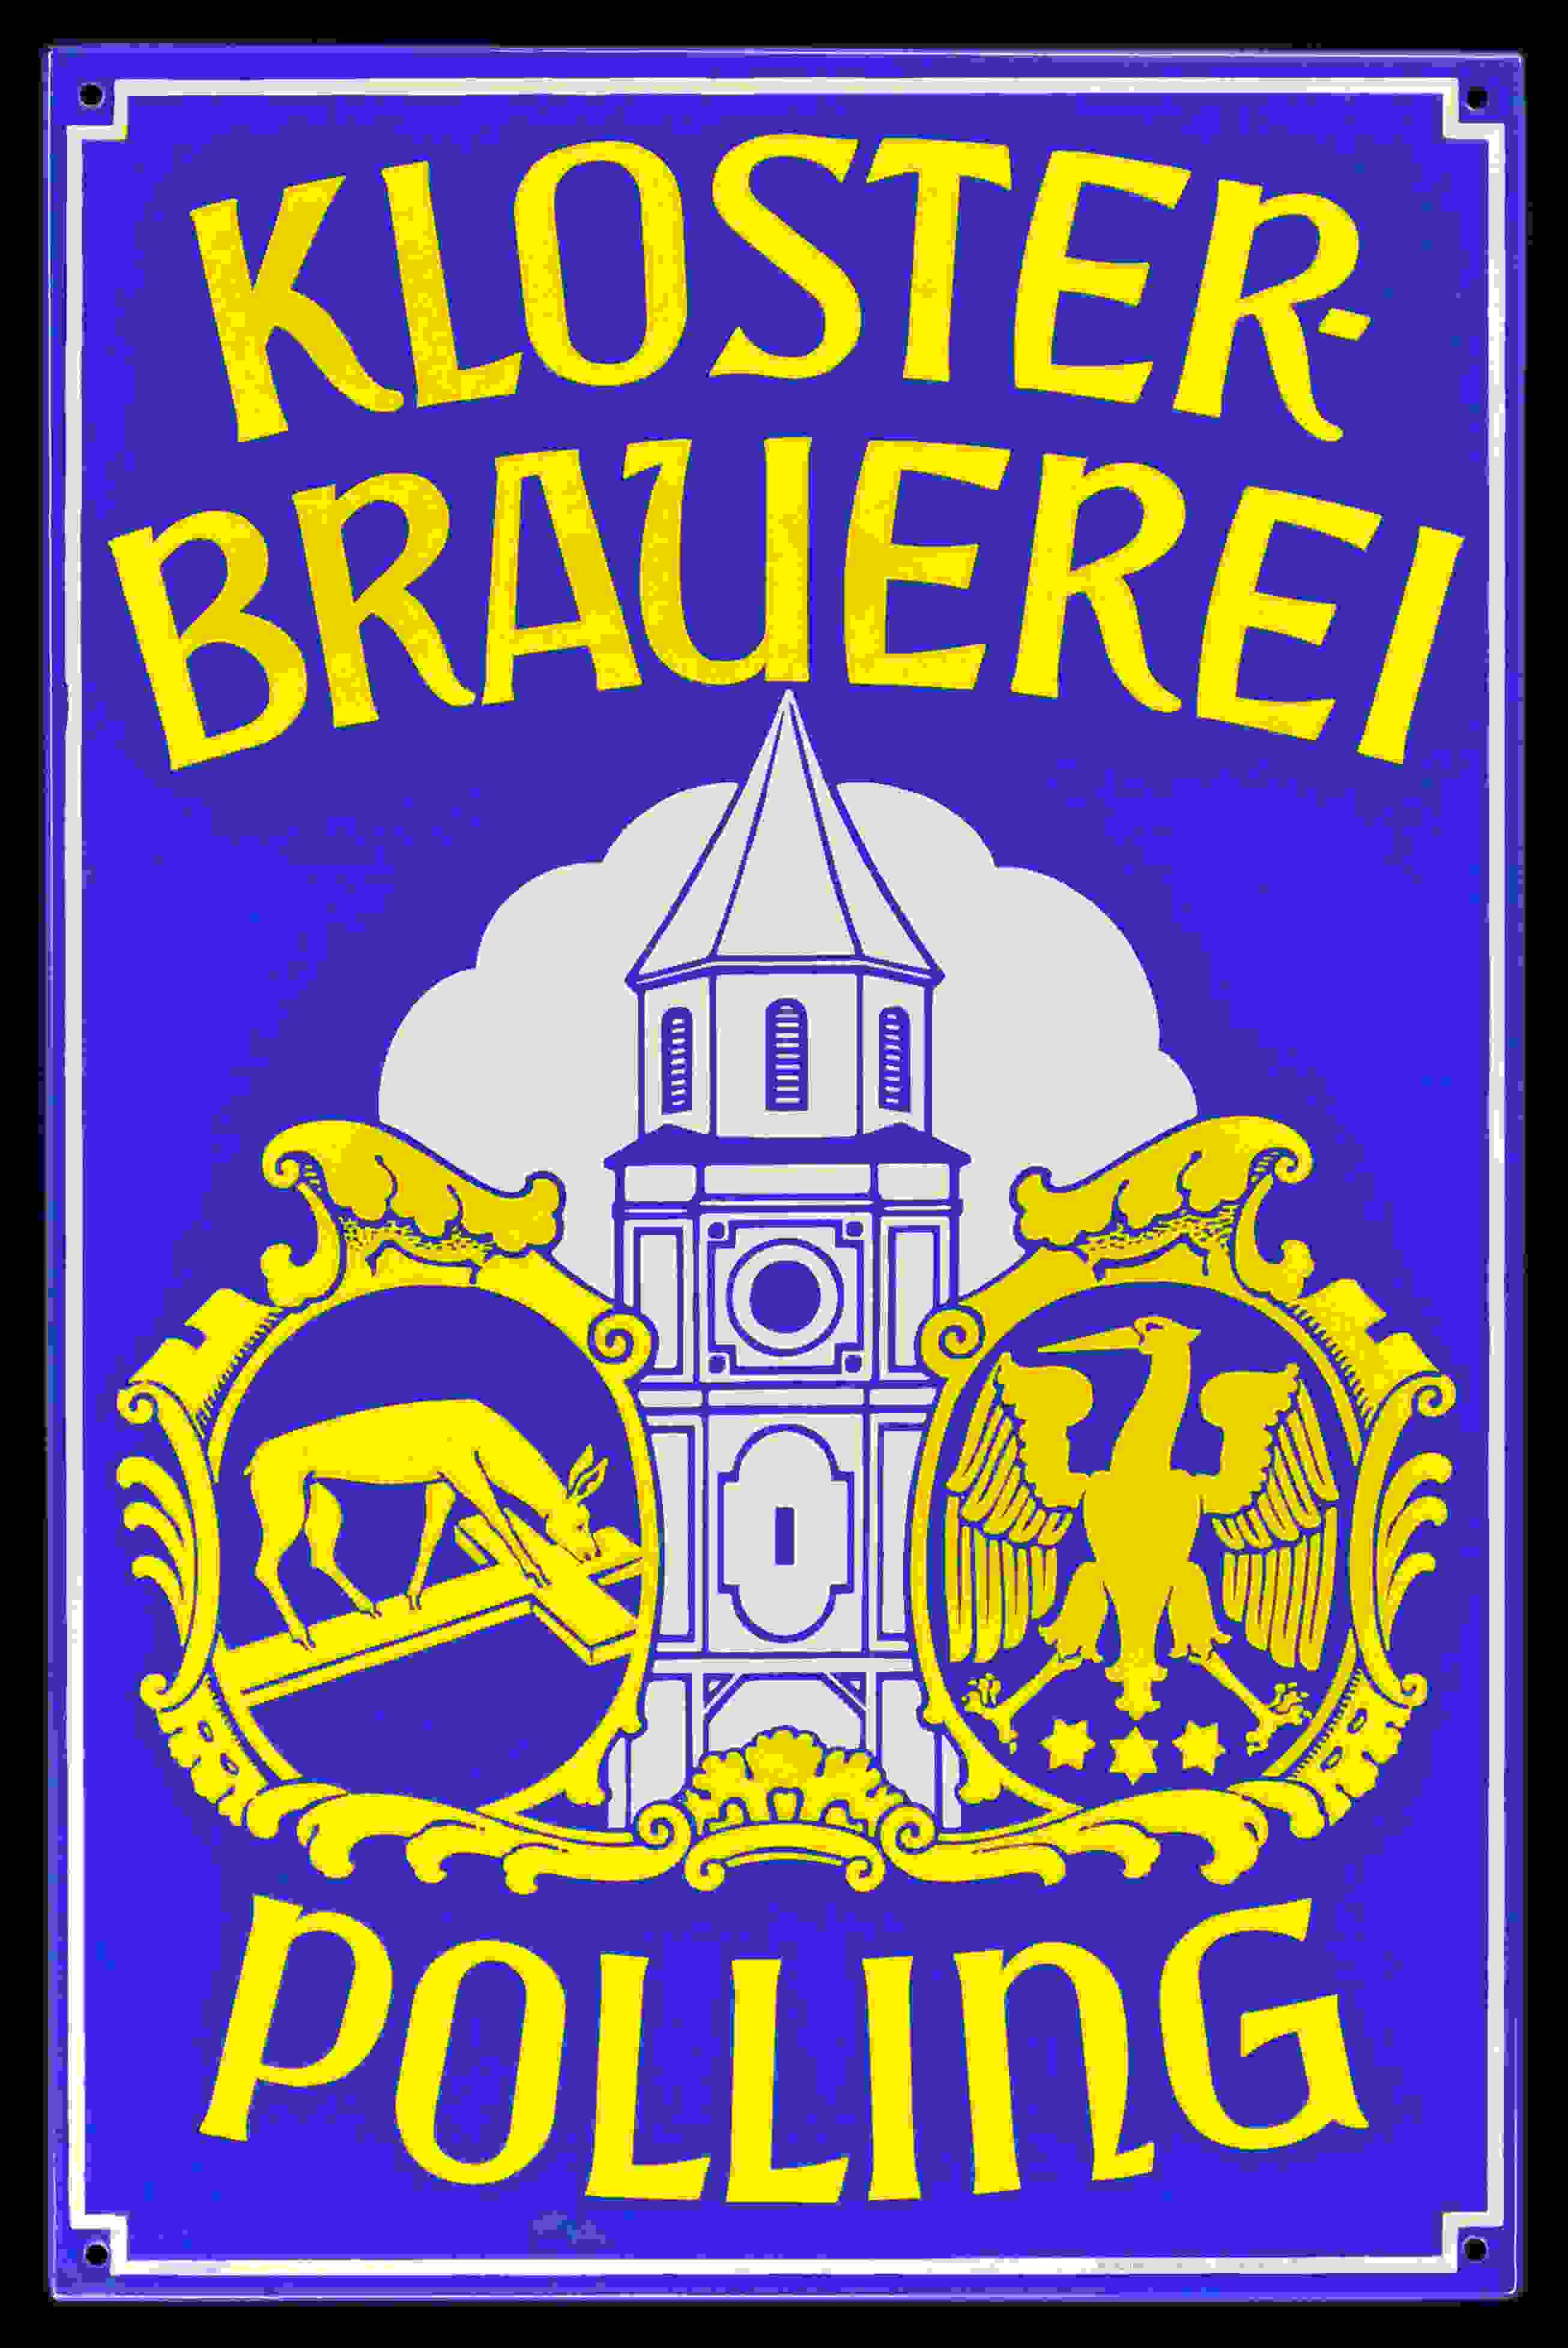 Klosterbrauerei Polling 